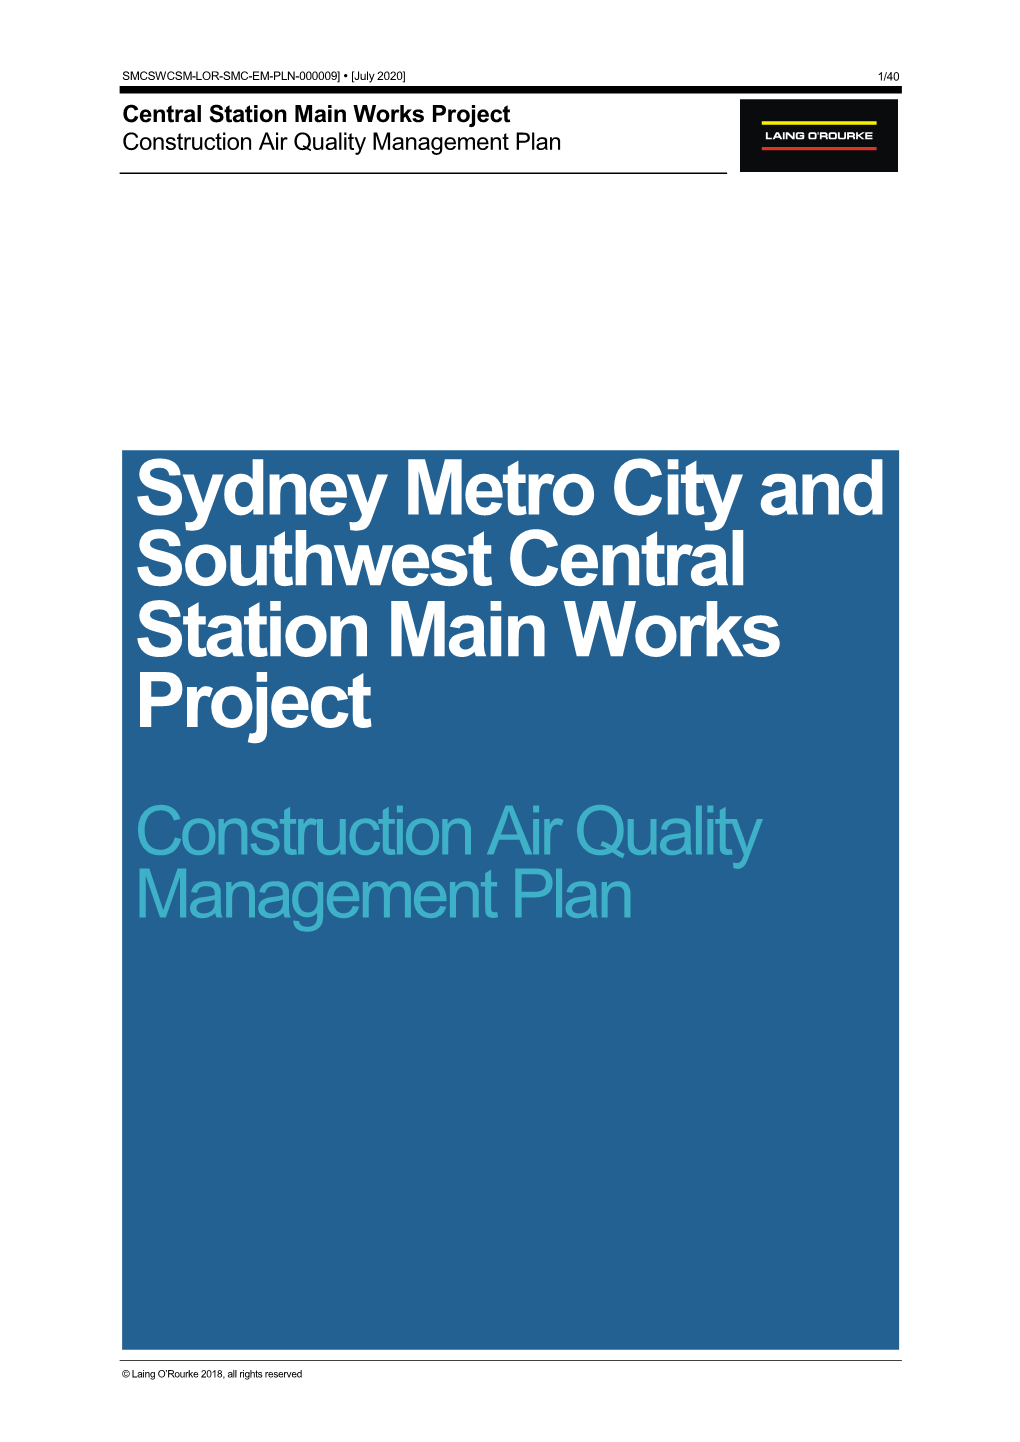 Air Quality Management Plan